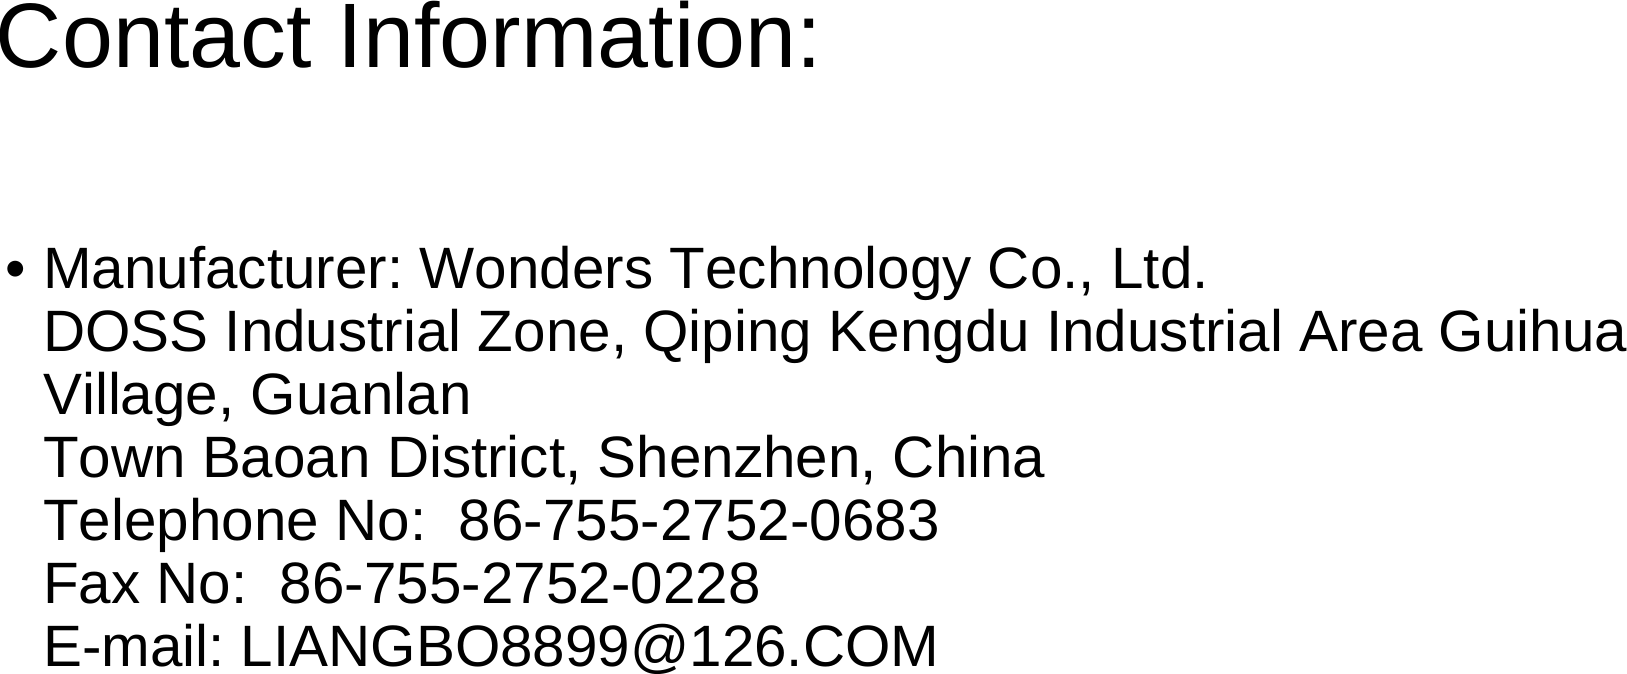 Contact Information:• Manufacturer: Wonders Technology Co., Ltd.                      DOSS Industrial Zone, Qiping Kengdu Industrial Area GuihuaVillage, GuanlanTown Baoan District, Shenzhen, China                                      Telephone No:  86-755-2752-0683                                                 Fax No:  86-755-2752-0228                                                            E-mail: LIANGBO8899@126.COM 